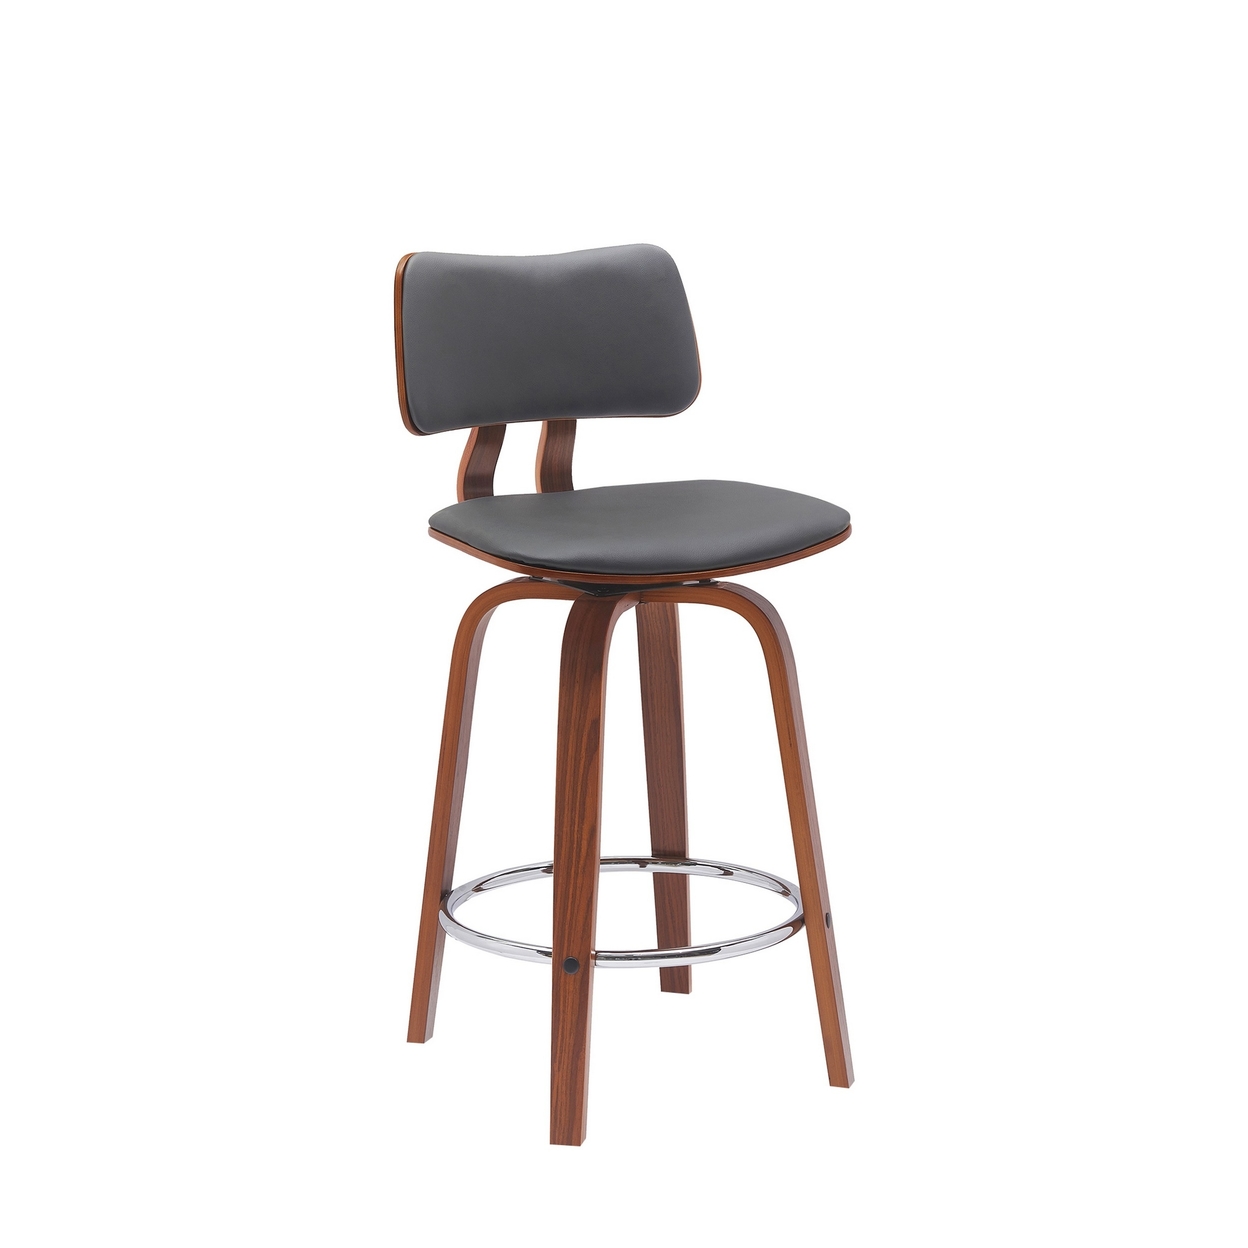 Pino 26 Inch Swivel Counter Stool Chair, Gray Faux Leather, Walnut Brown - Saltoro Sherpi